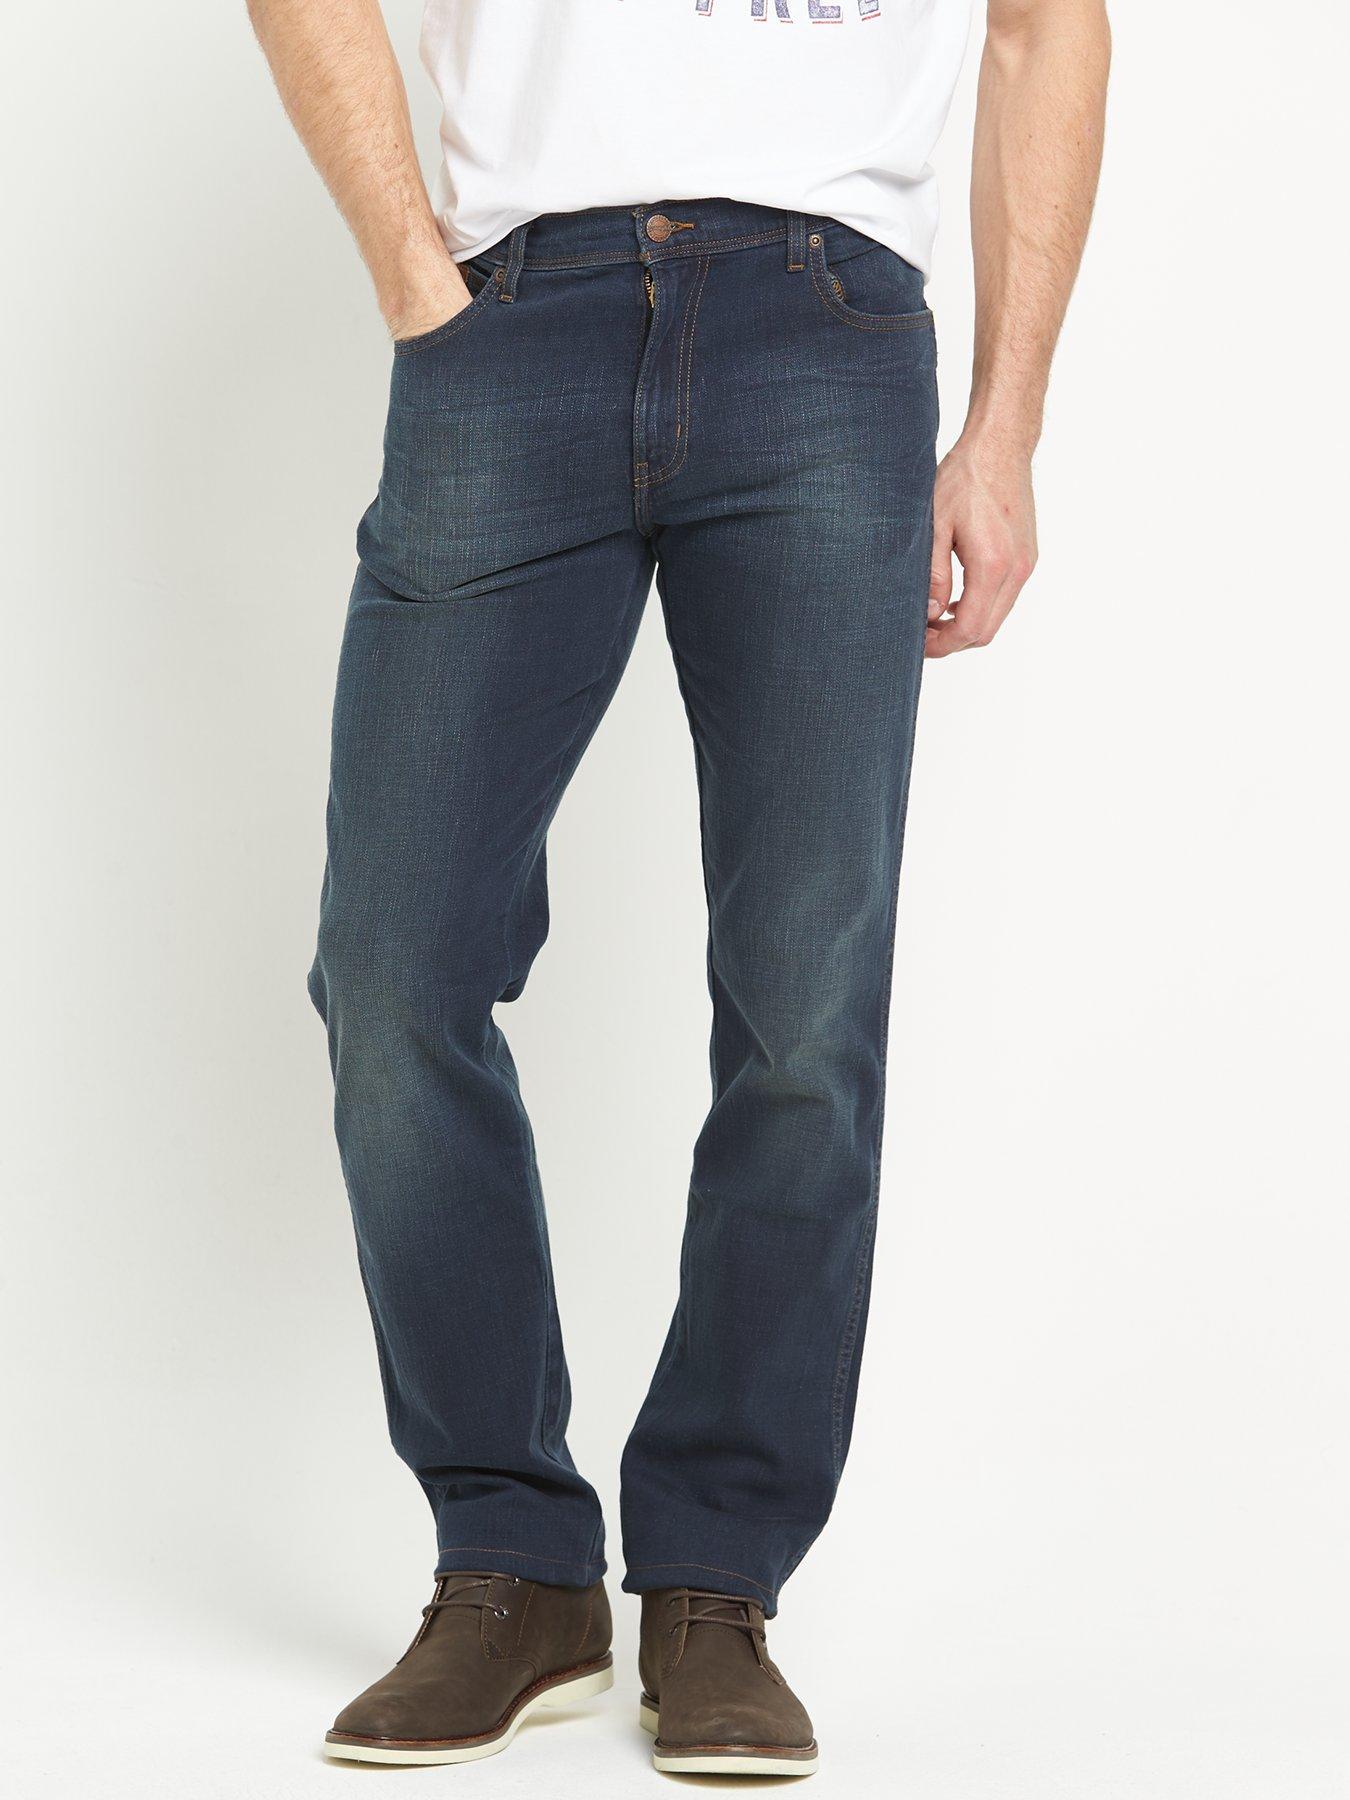 wrangler jeans ireland